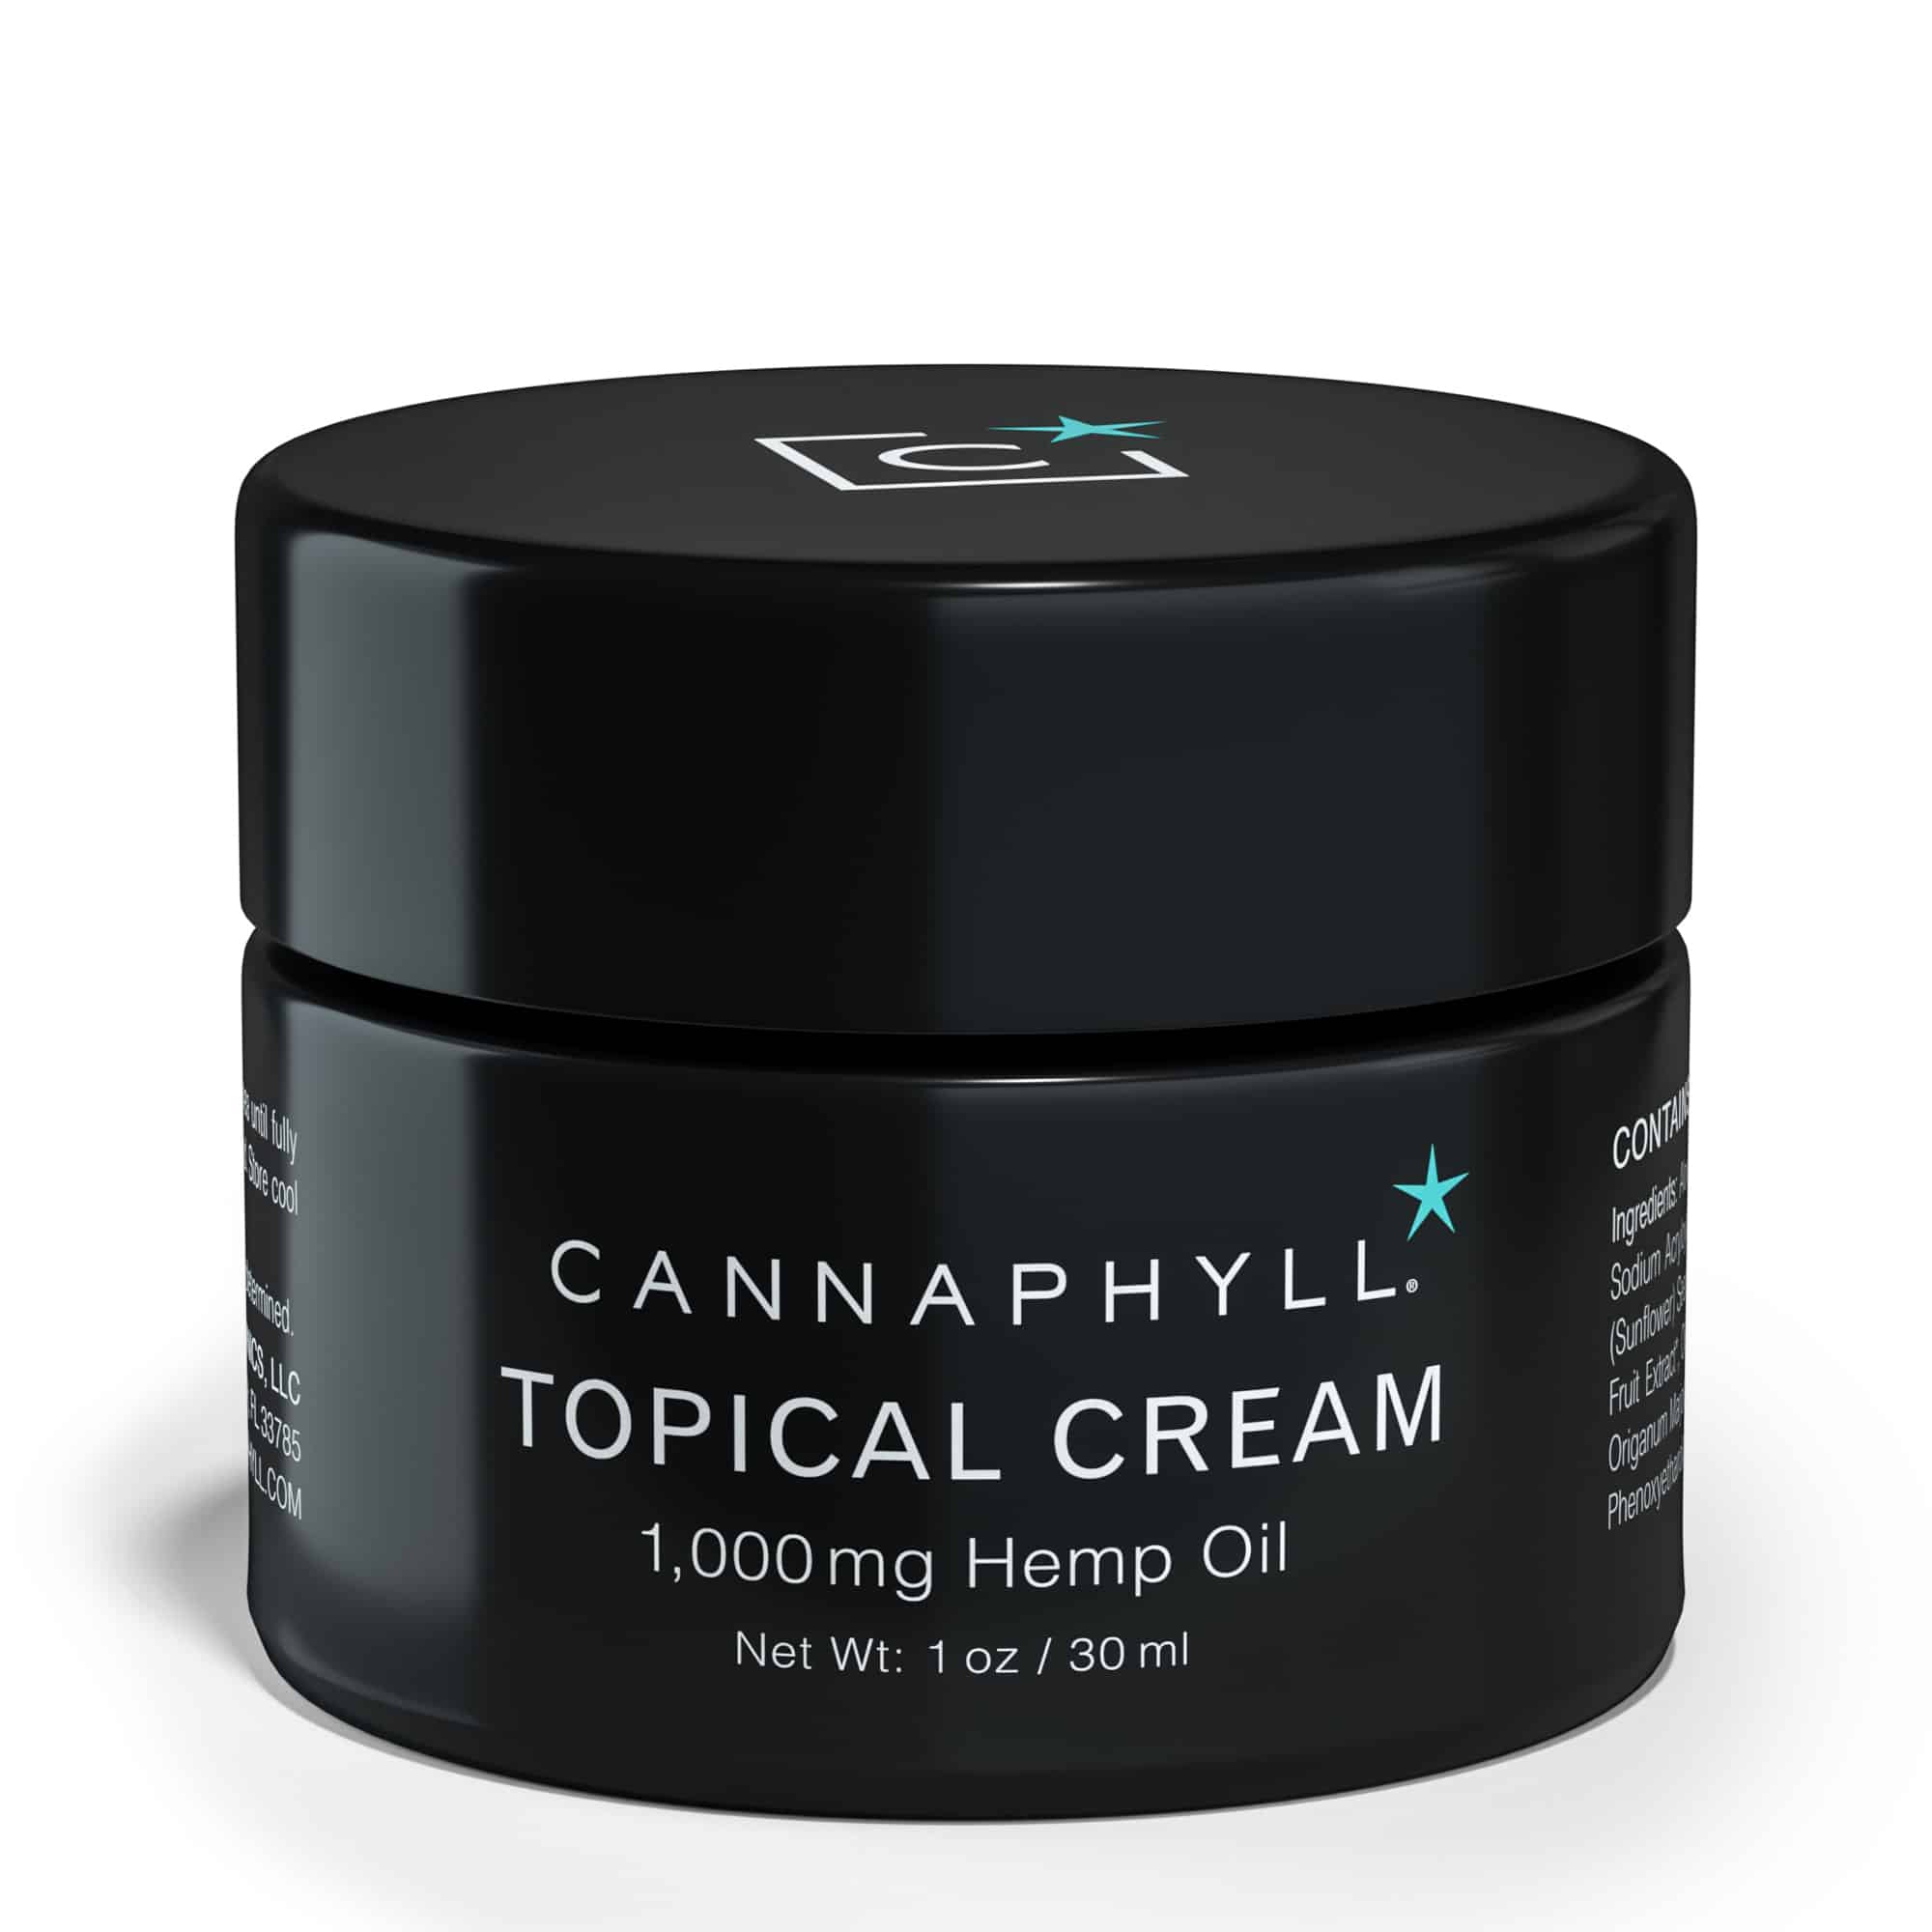 Cannaphyll Topical Cream